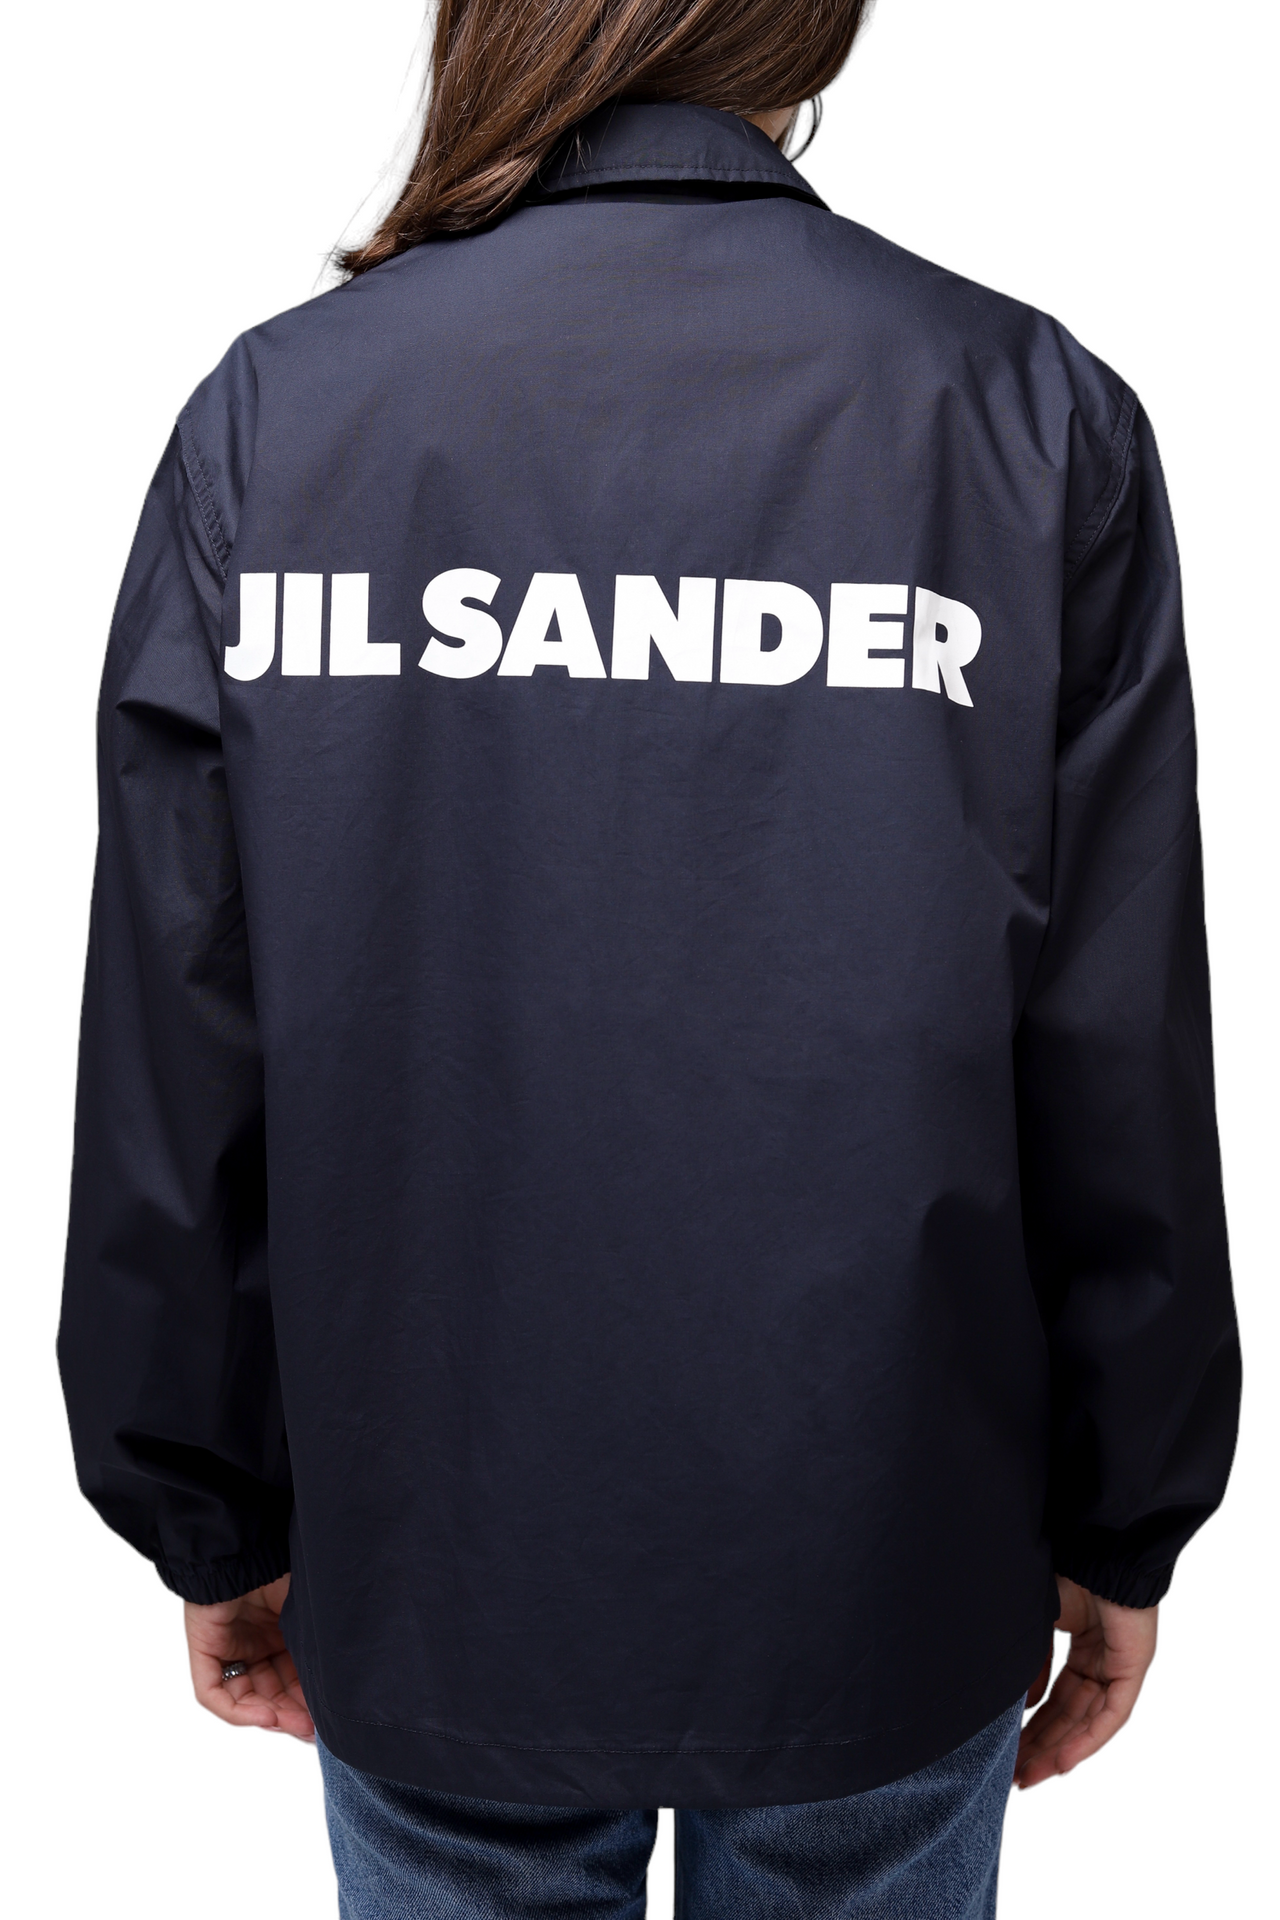 Jil Sander Logo Print Back Coach Jacket Black